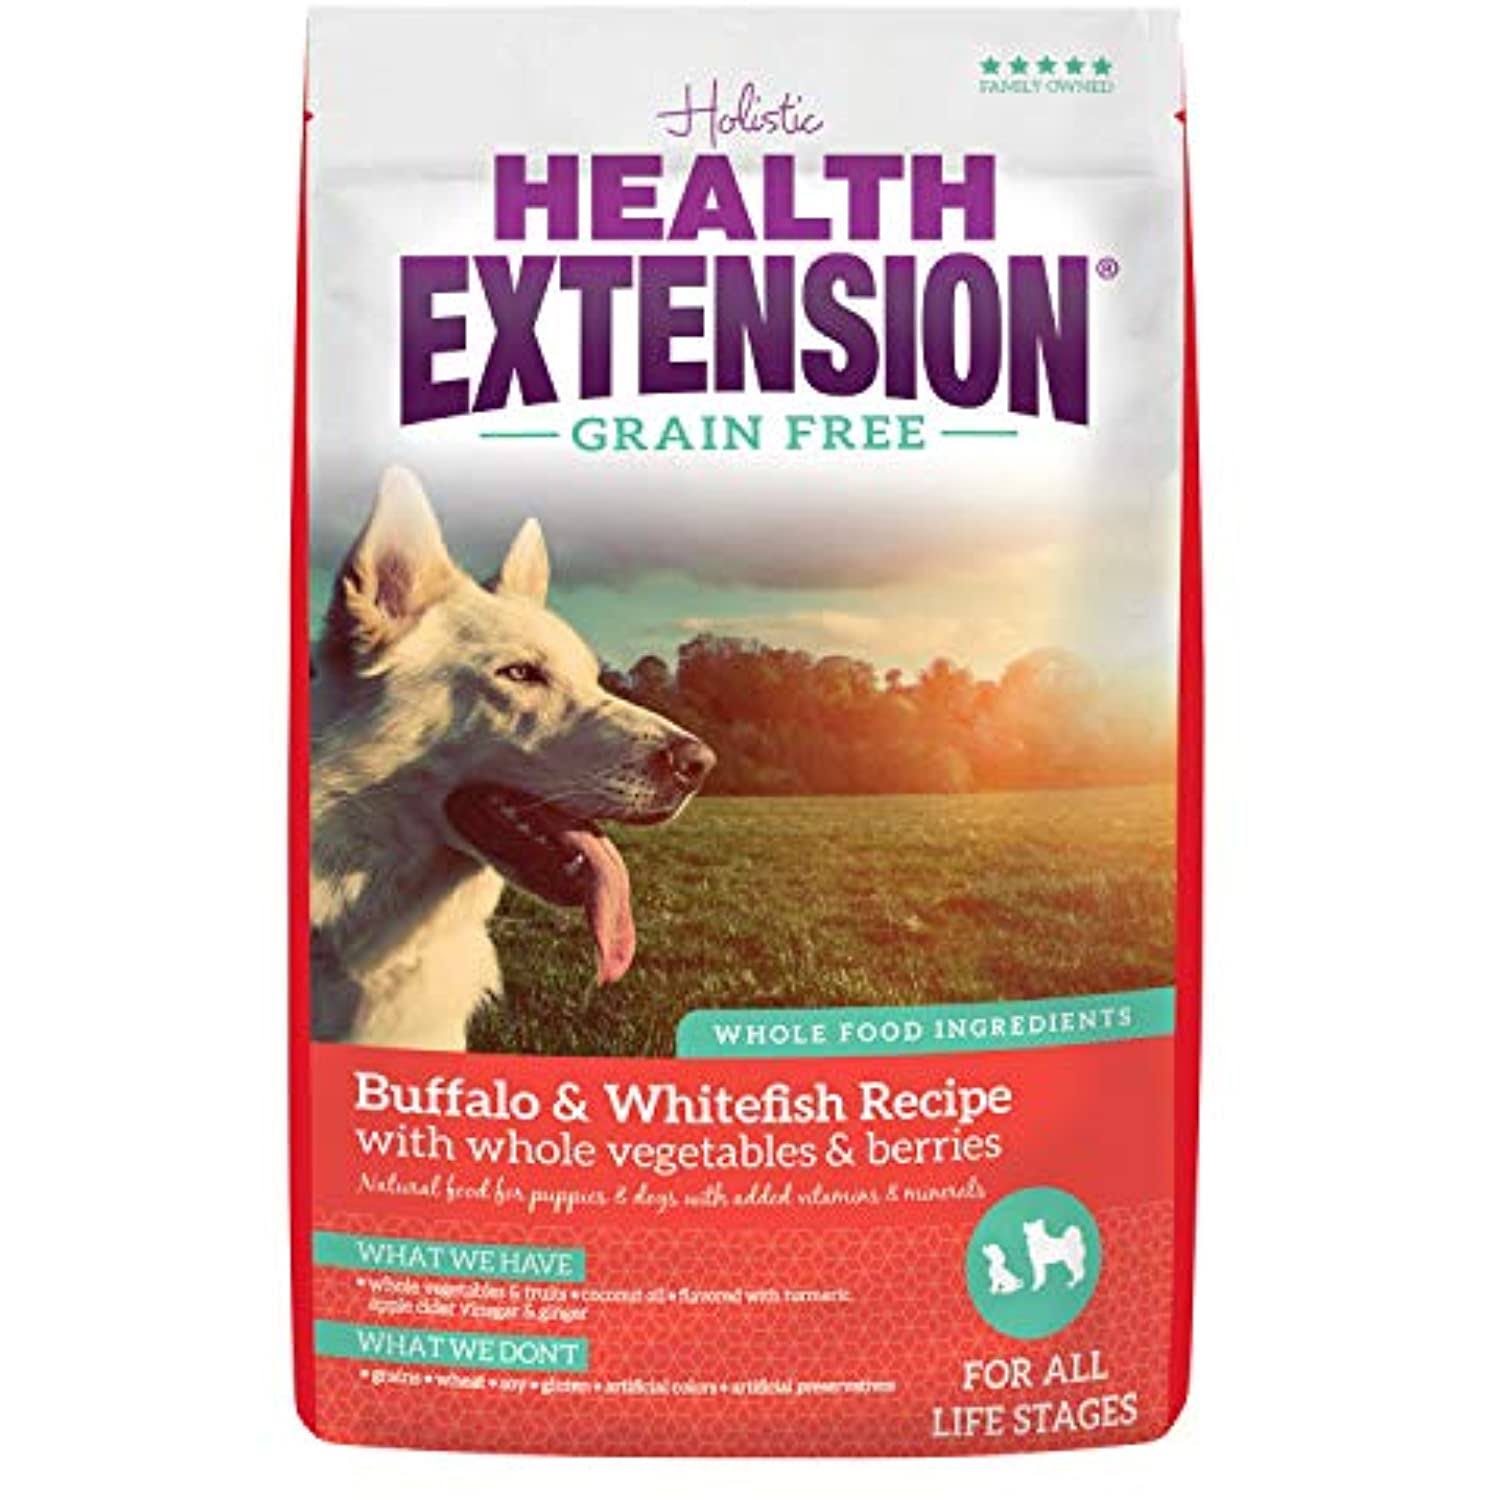 Health Extension Grain Free Buffalo Whitefish Dry Dog Food - 23.5 lb